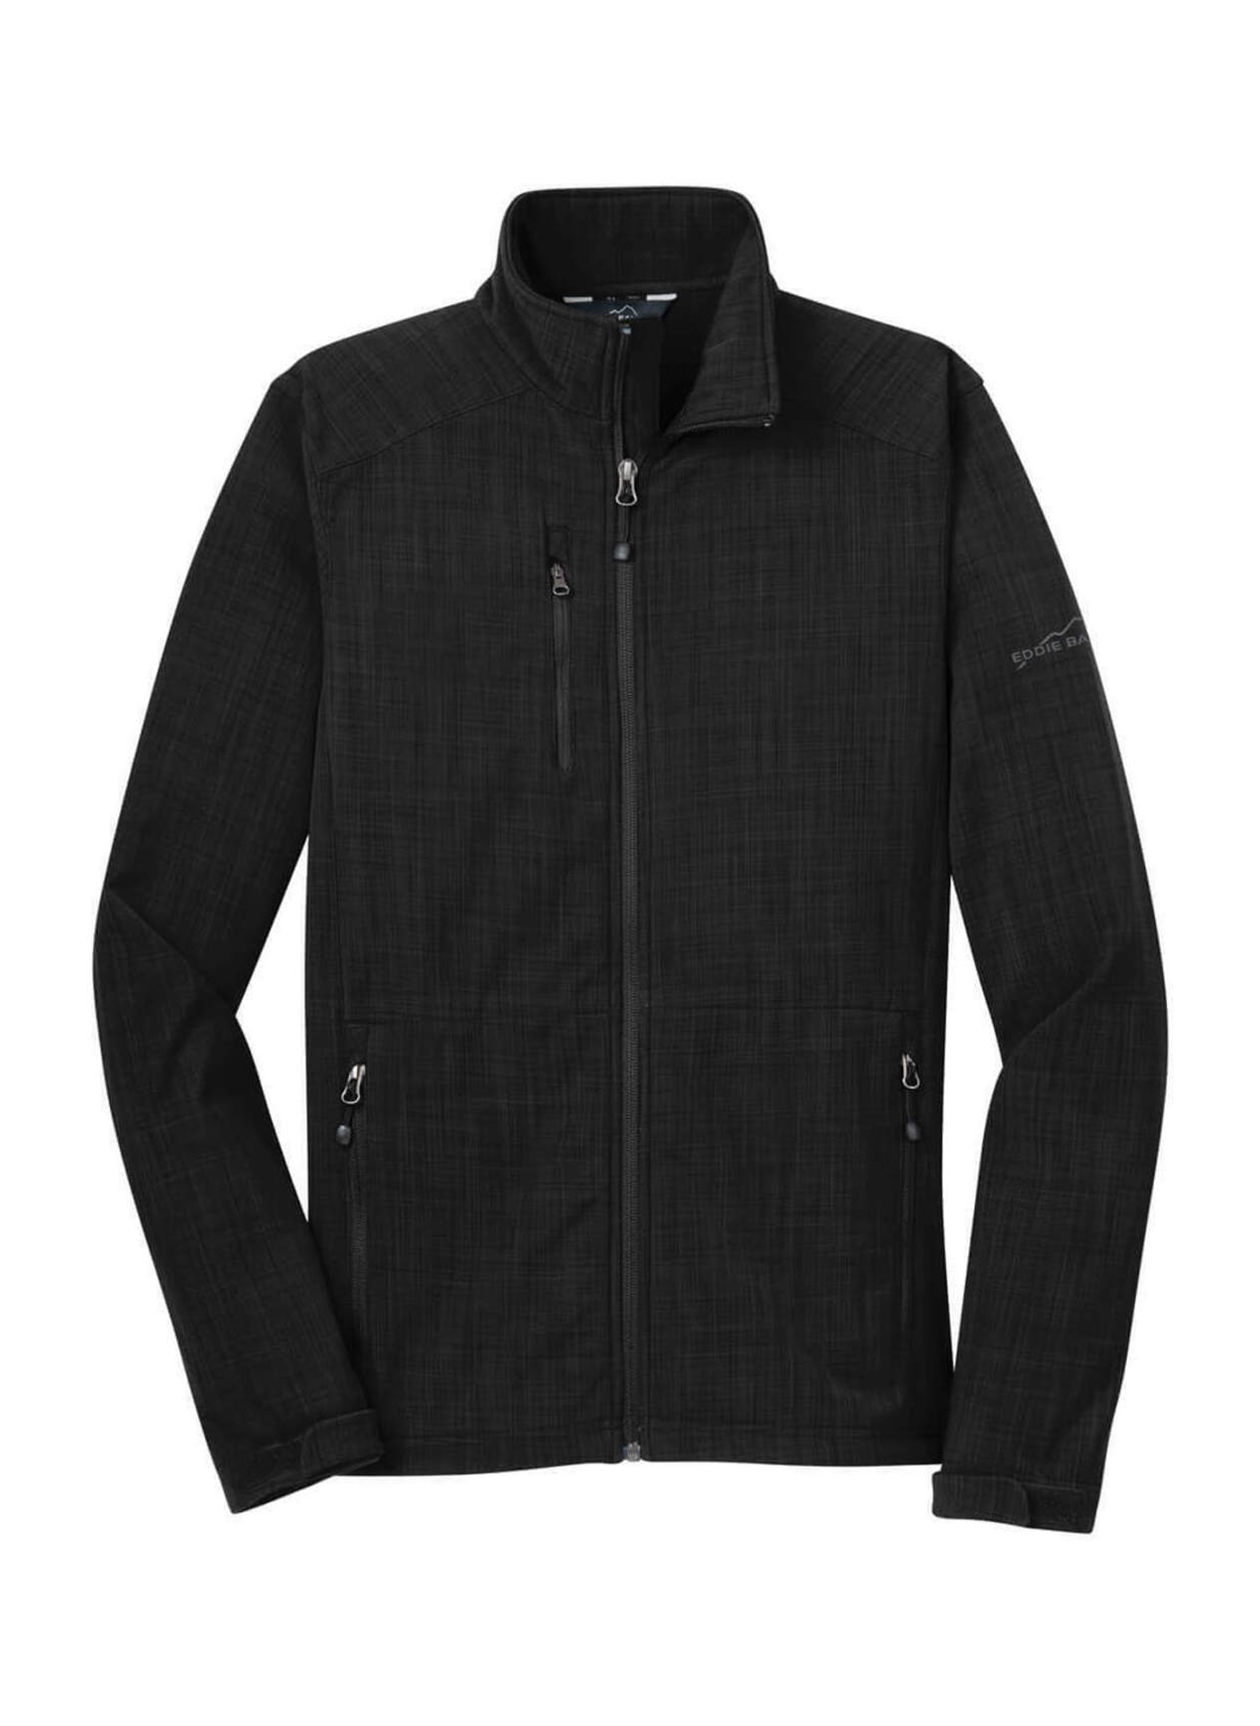 Eddie Bauer Black Men's Shaded Crosshatch Soft Shell Jacket